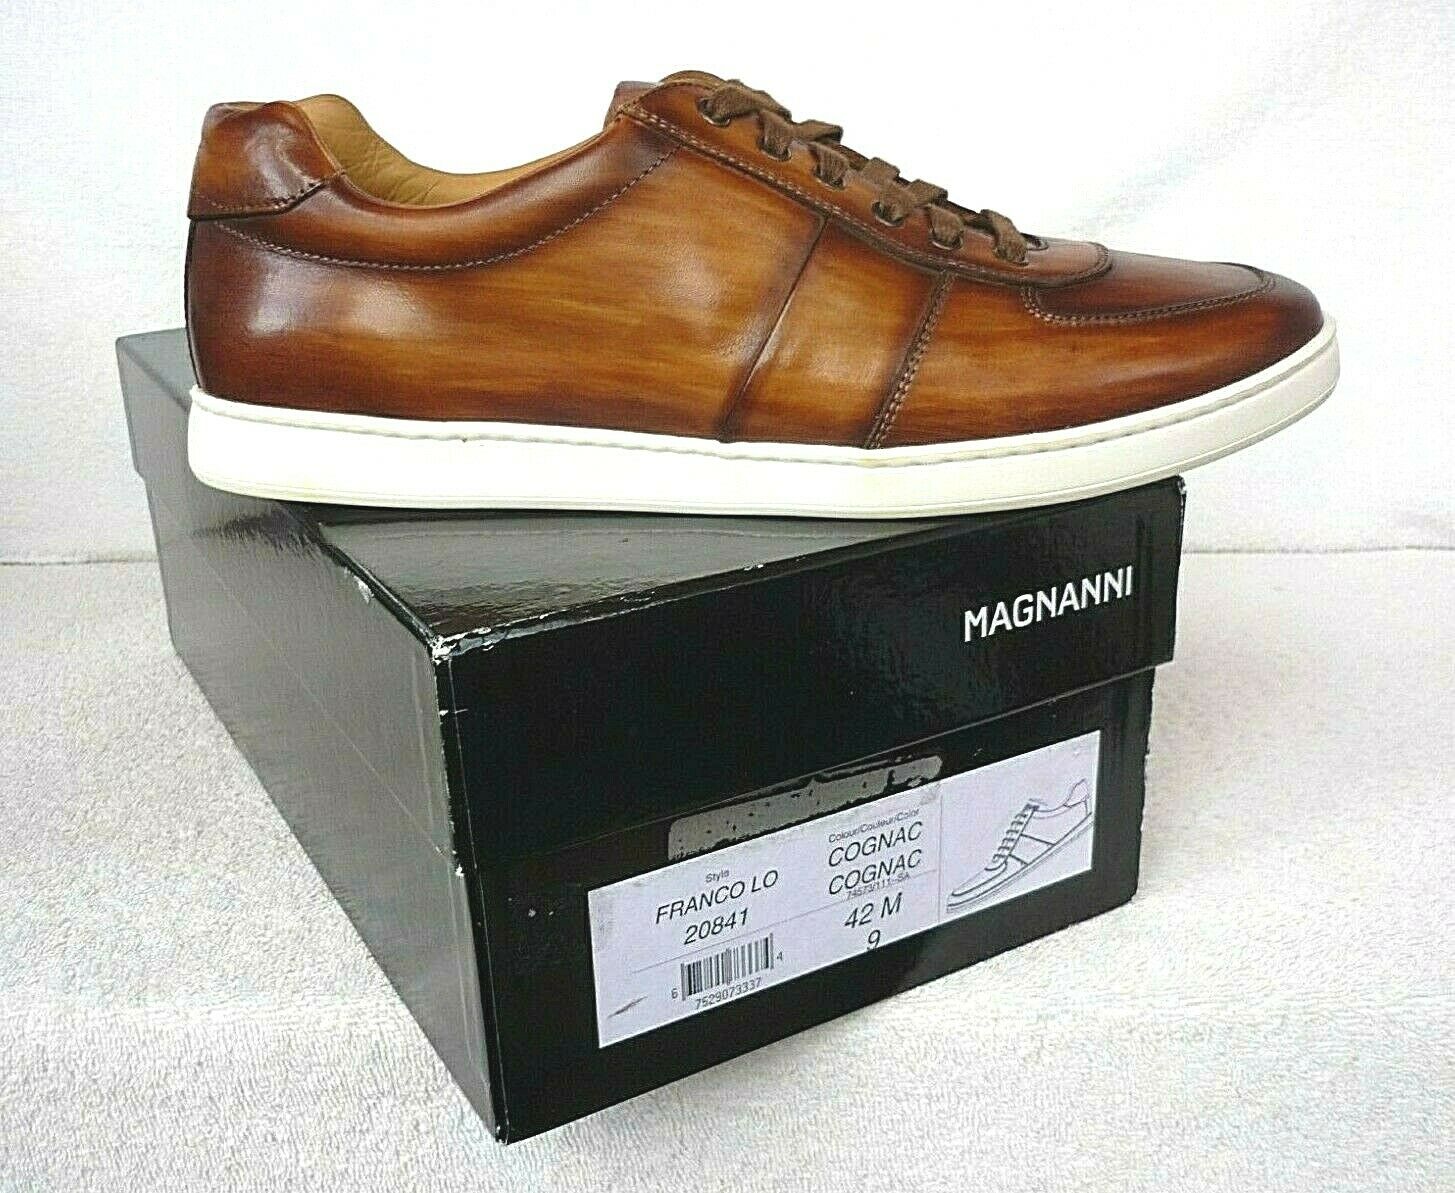 Magnanni Franco Lo Men's Sz 9 Cognac Brown Leather Sneakers Casual Shoes $395